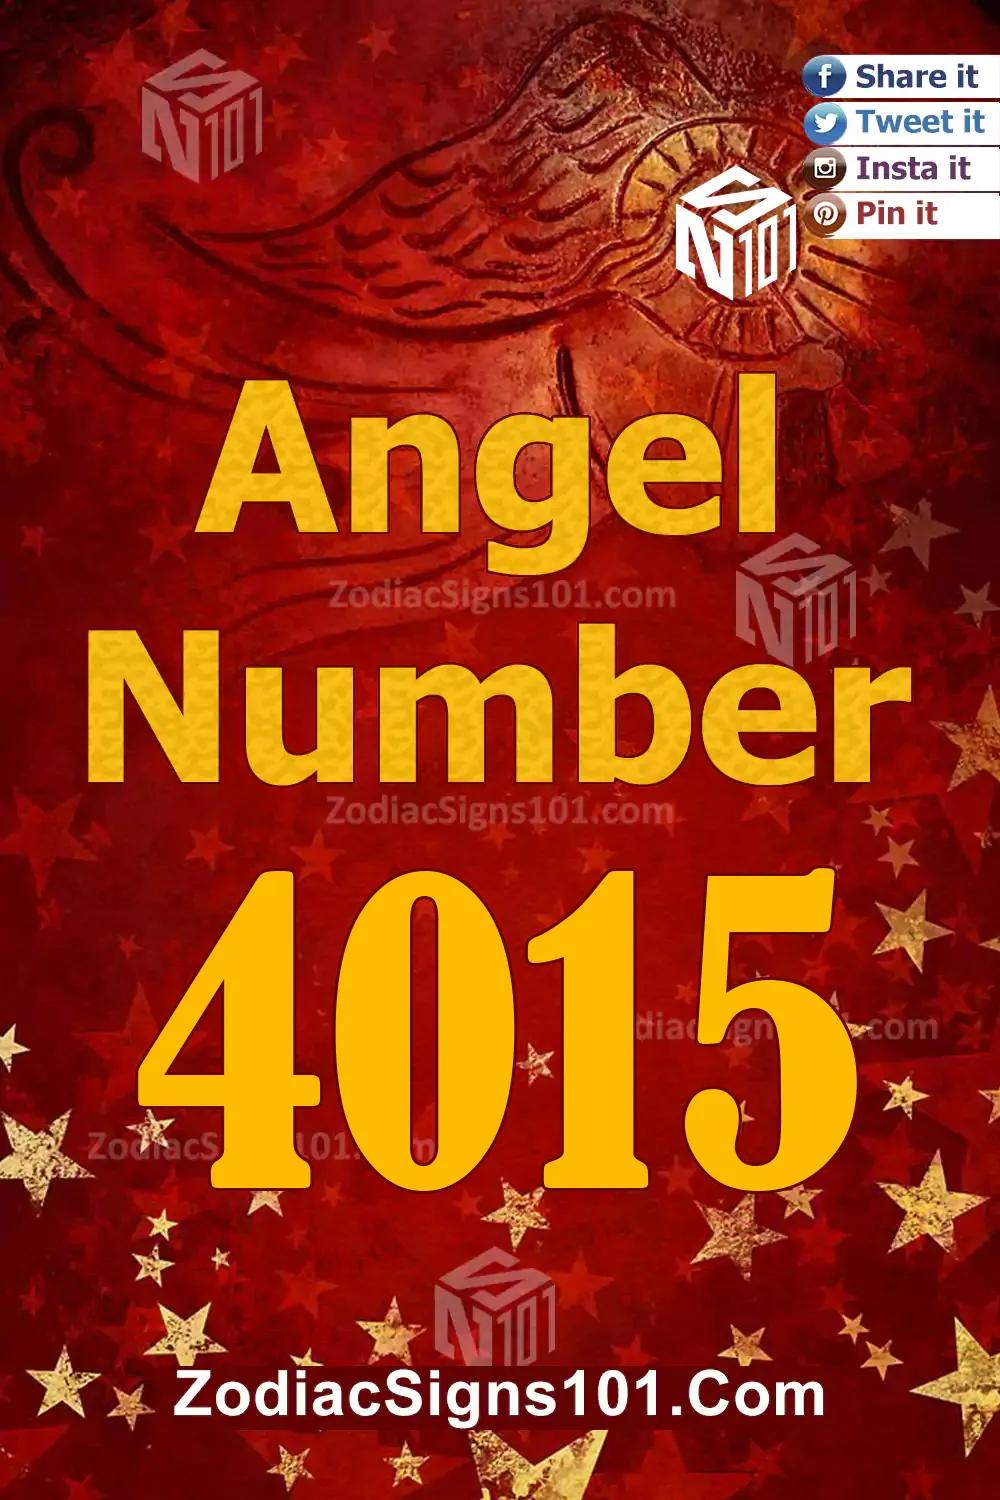 4015-Angel-Number-Meaning.jpg